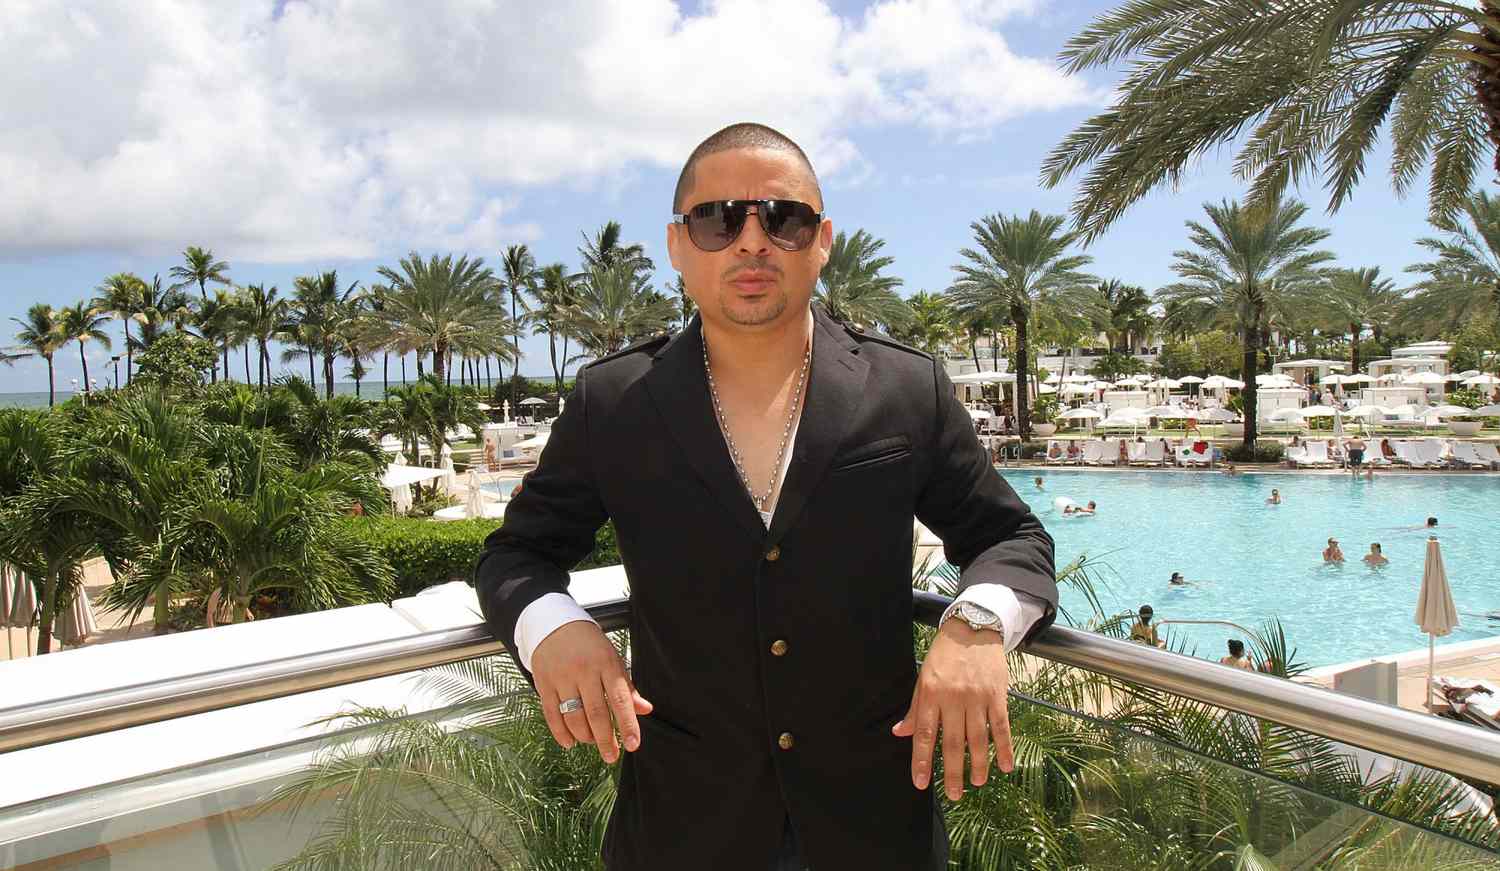 Larry Hernandez Star Of Mun2 Reality Series "Larrymania" Visits South Beach